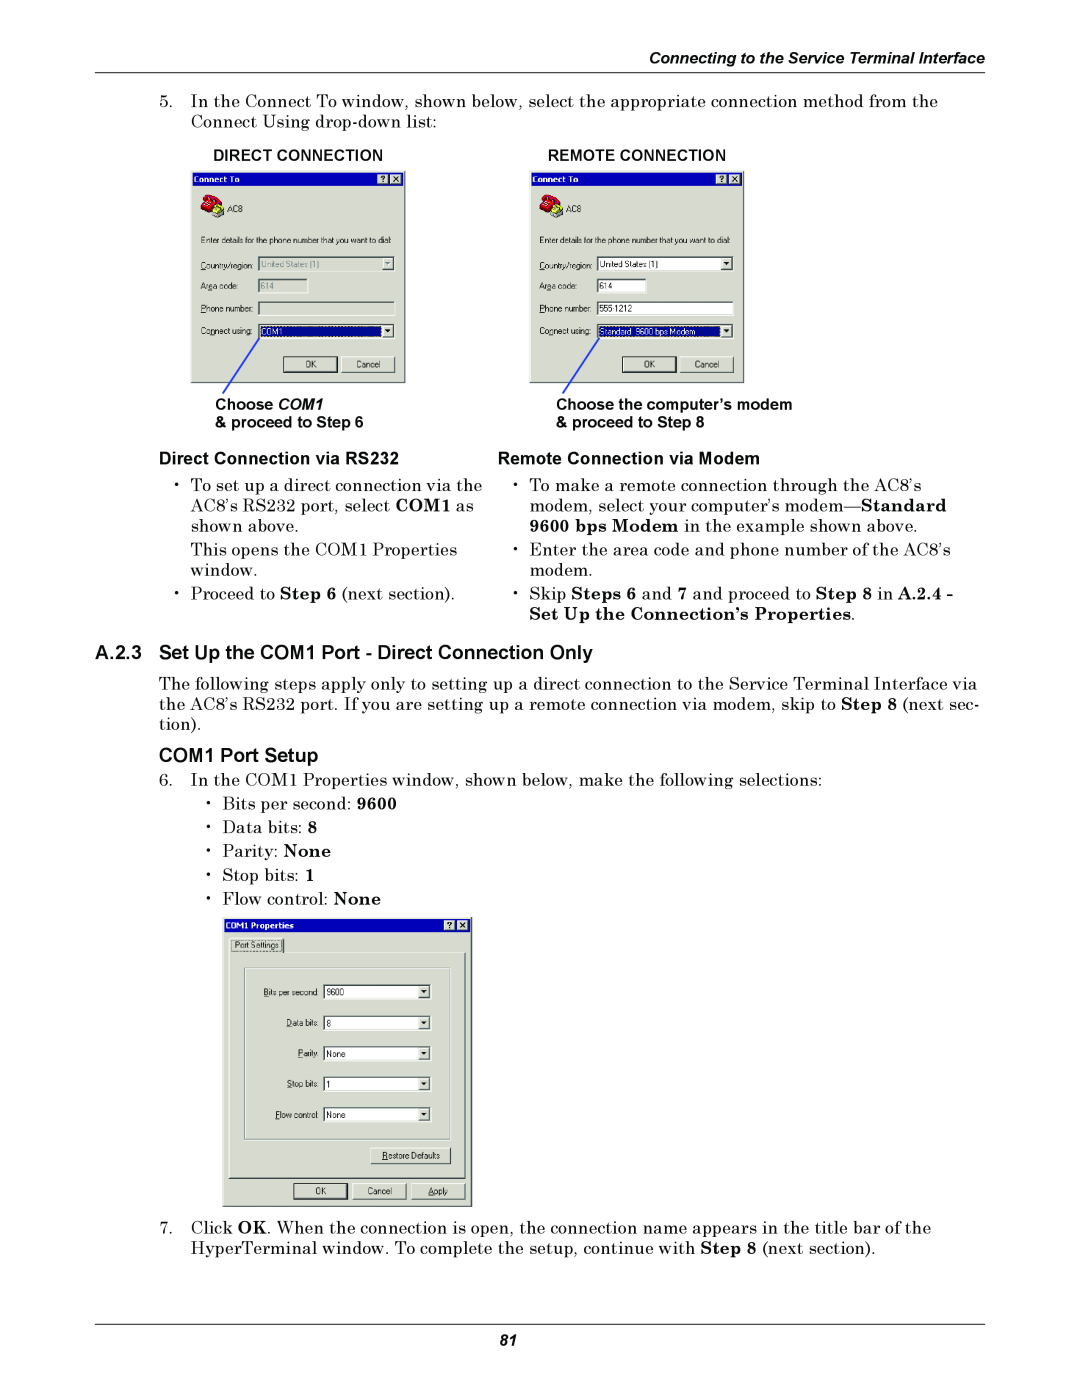 Emerson AC8 user manual COM1 Port Setup, Direct Connection via RS232, Remote Connection via Modem 